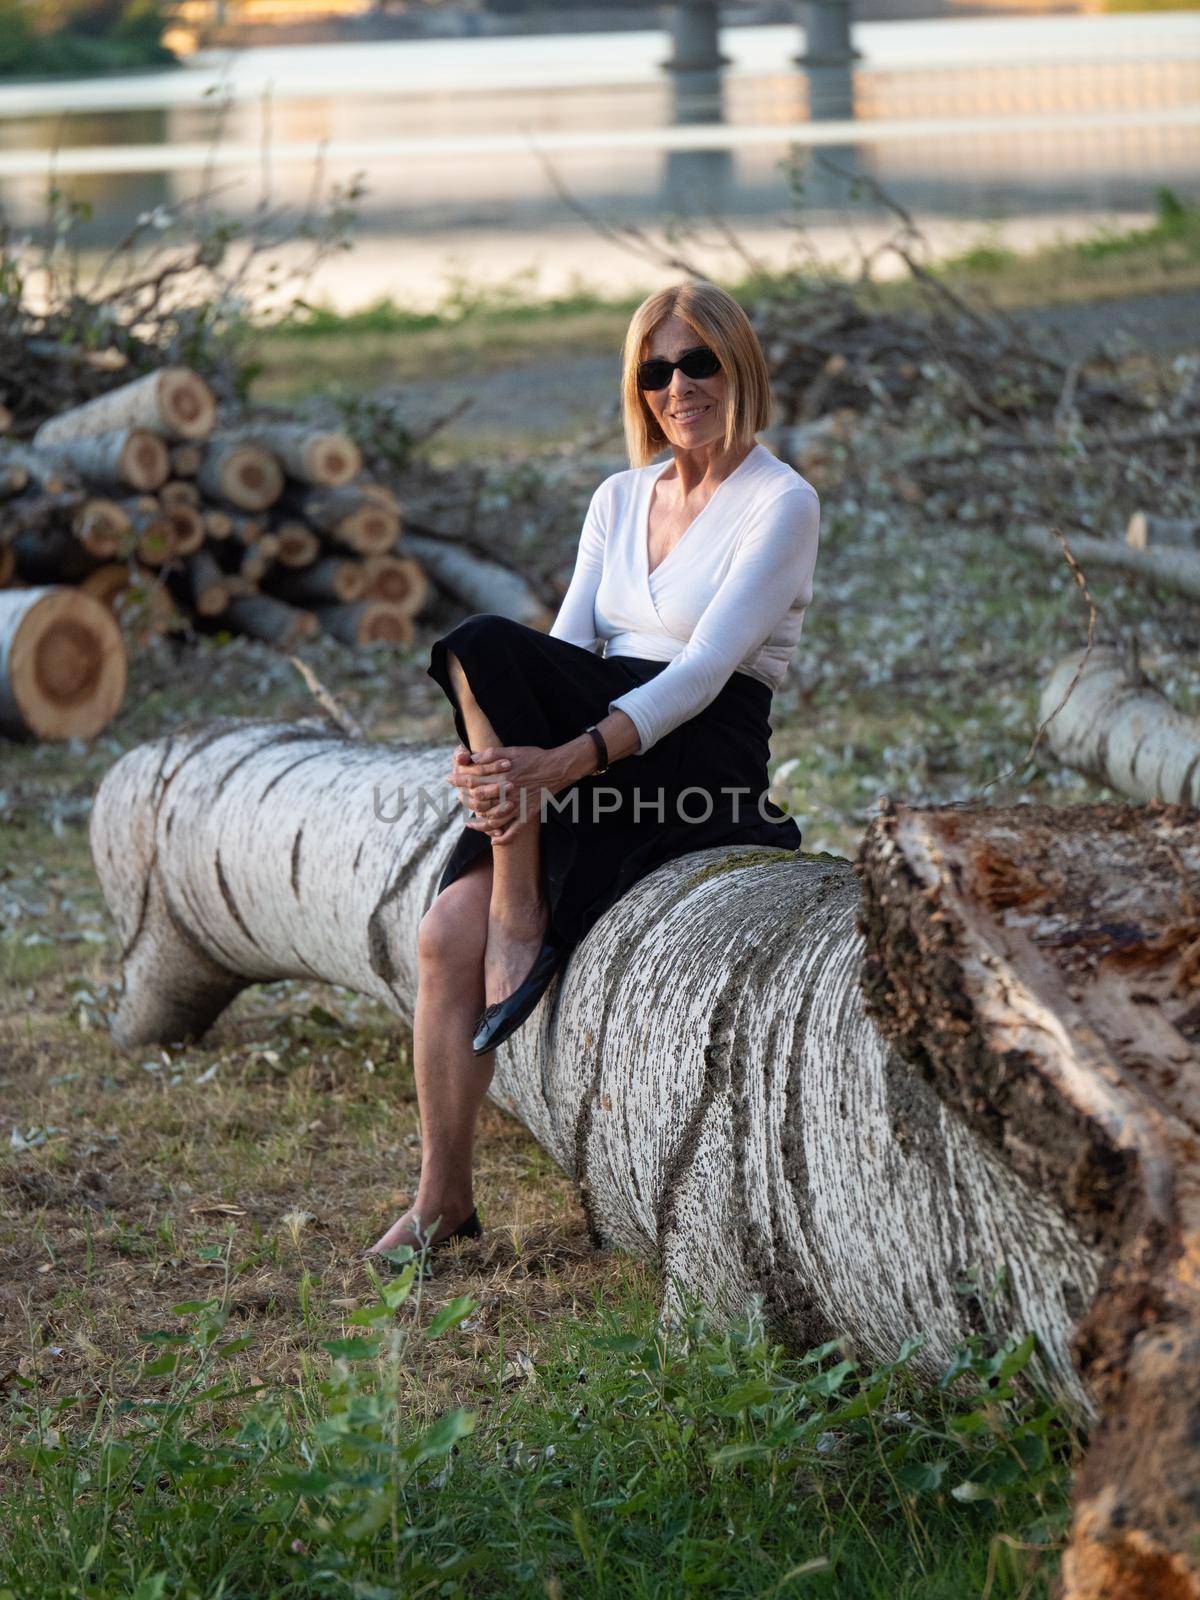 senior fit elegant lady dressed blaka dn white wearing sunglasses enjoying nature in summer